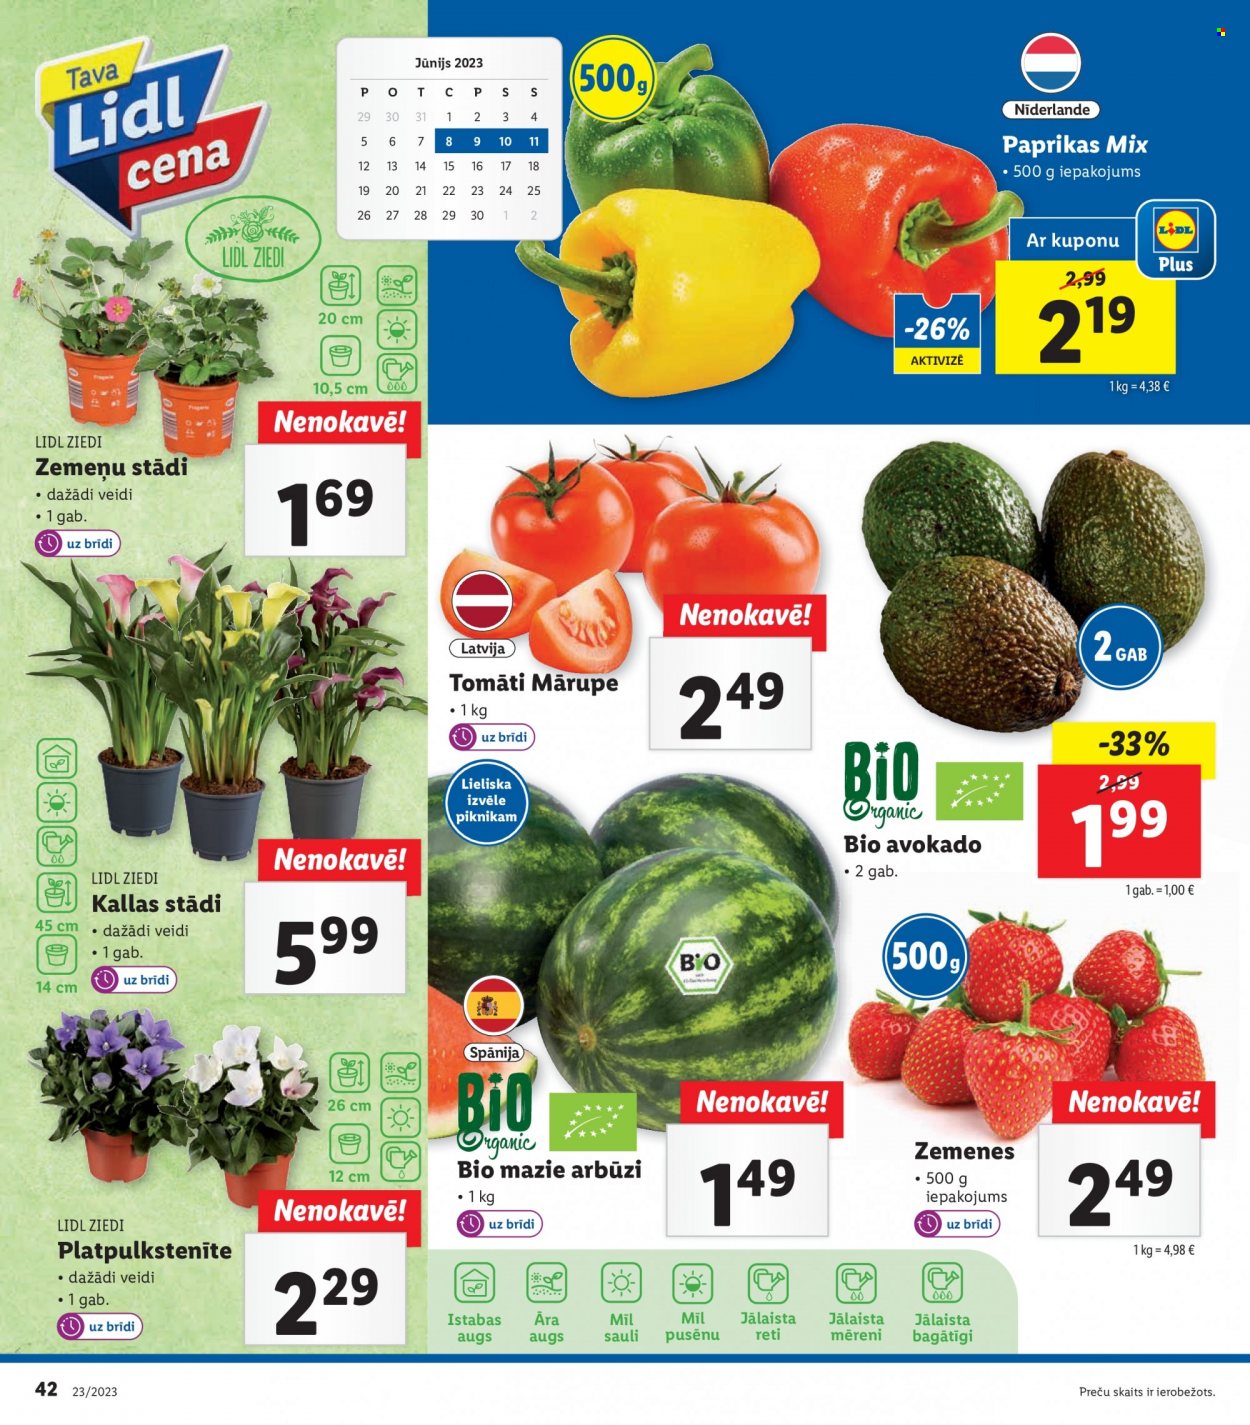 thumbnail - Lidl buklets - 05.06.2023. - 11.06.2023. - Akcijas preces - tomāti, avokado, zemenes, arbūzi, ziedi, augs, āra augs. 42. lapa.